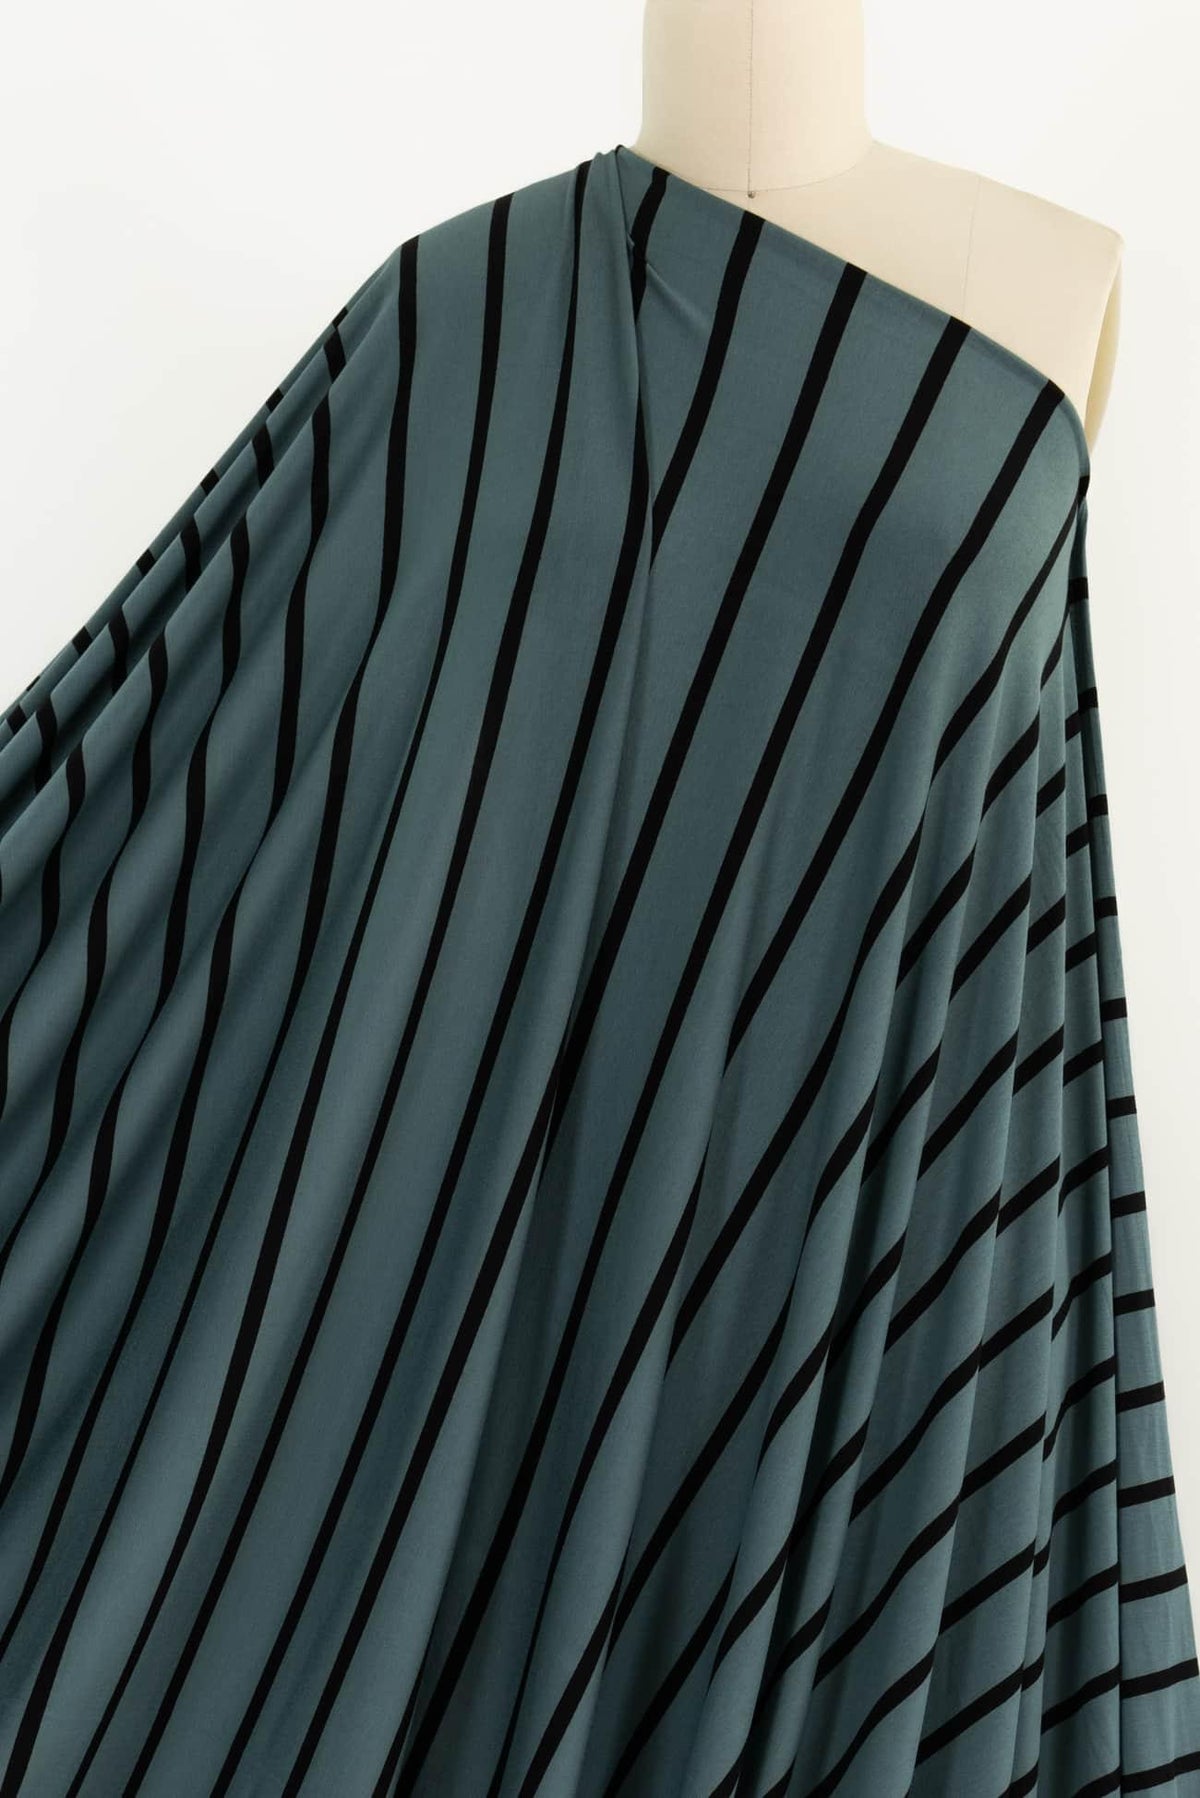 Josh Blue Stripes USA Knit - Marcy Tilton Fabrics